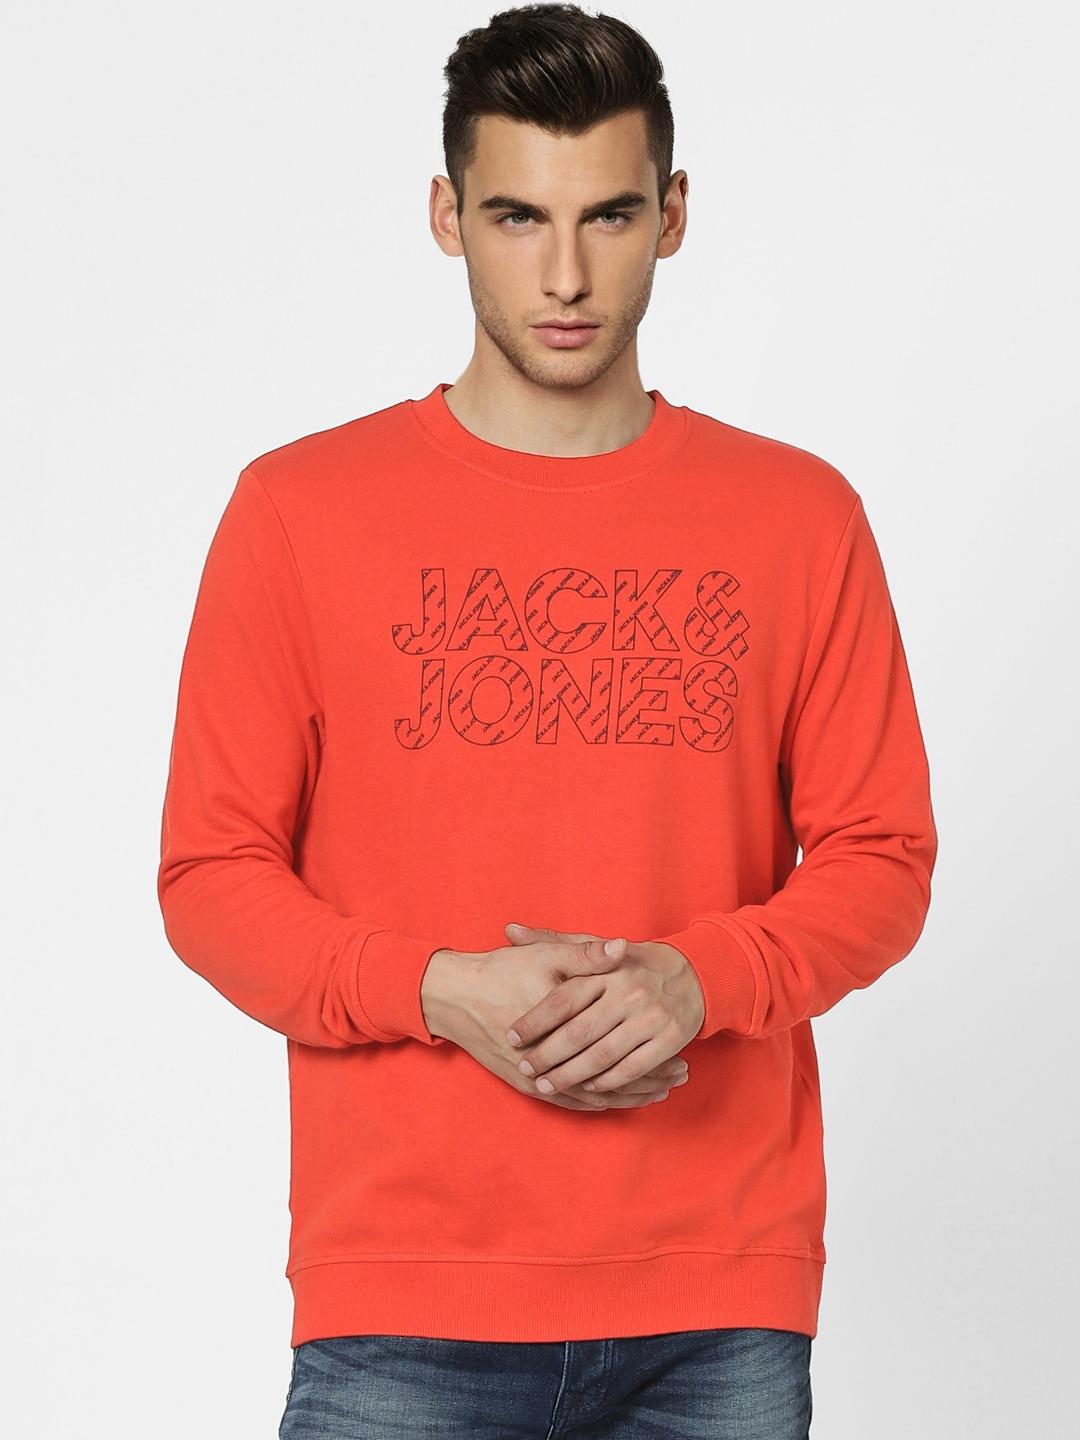 jack & jones men red logo printed sweatshirt